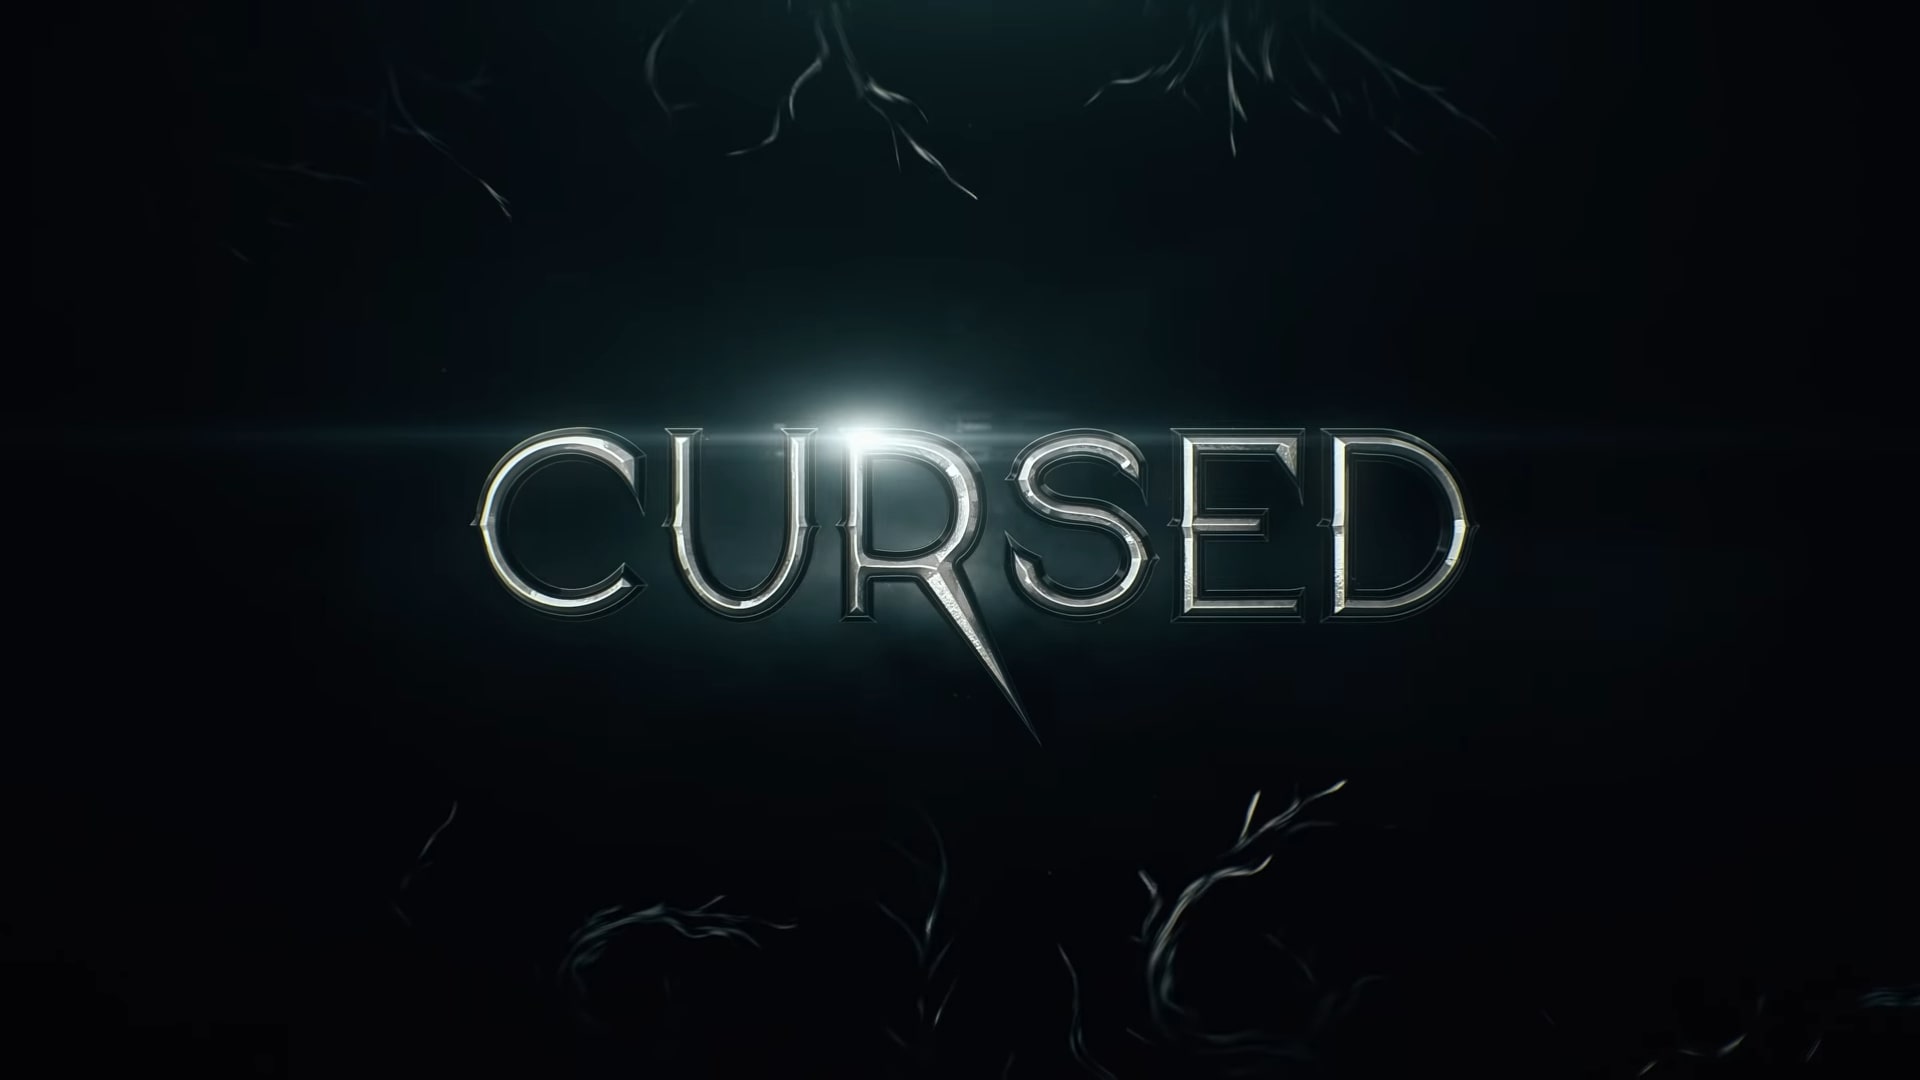 Netflix CURSED Trailer, Netflix Drama Series, Netflix Fantasy Series, Coming to Netflix in July 2020